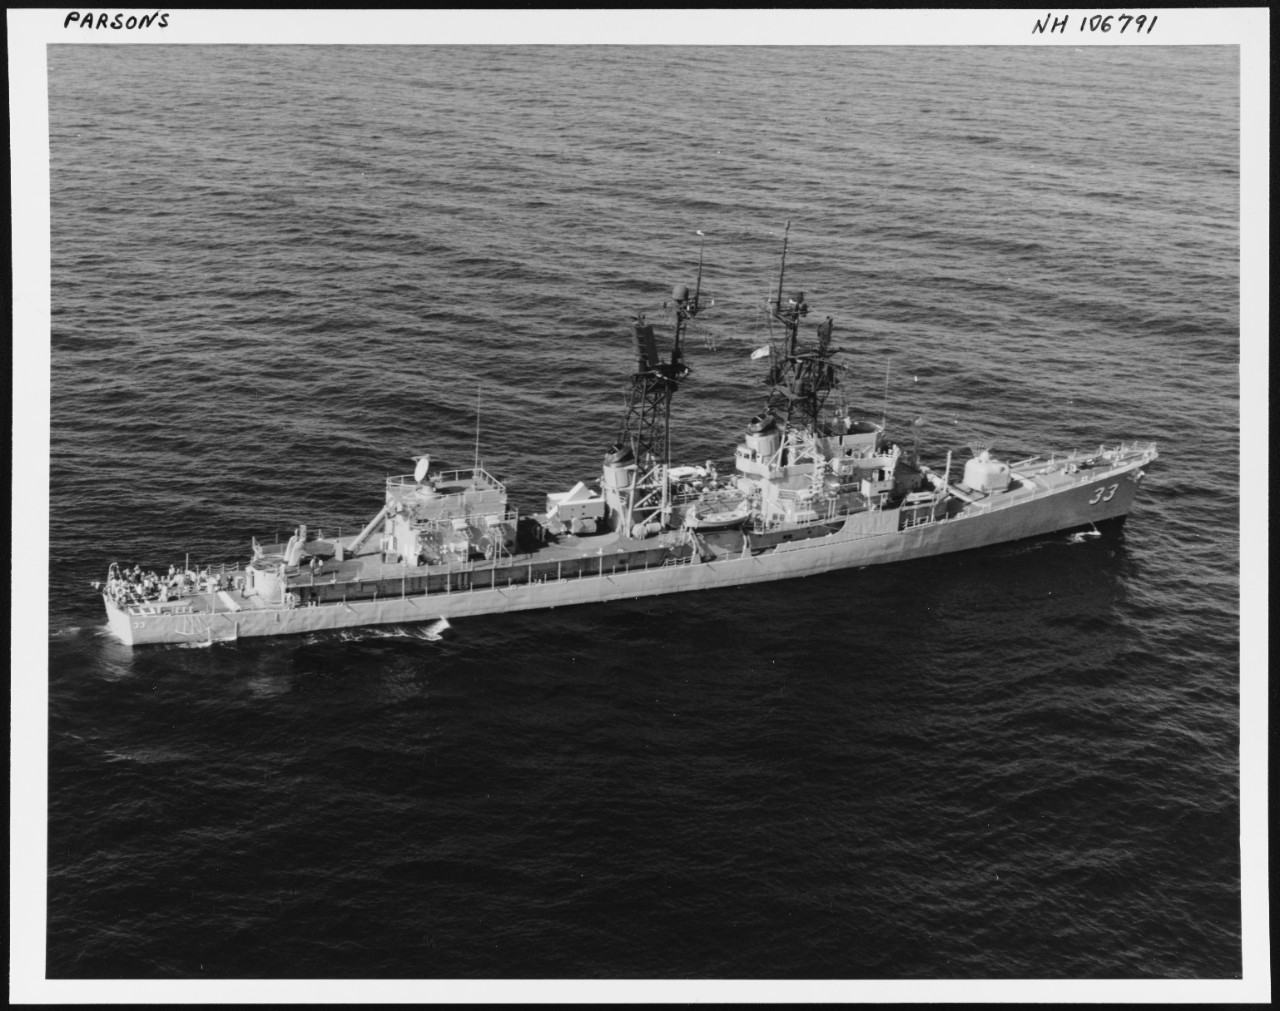 Photo # NH 106791  USS Parsons